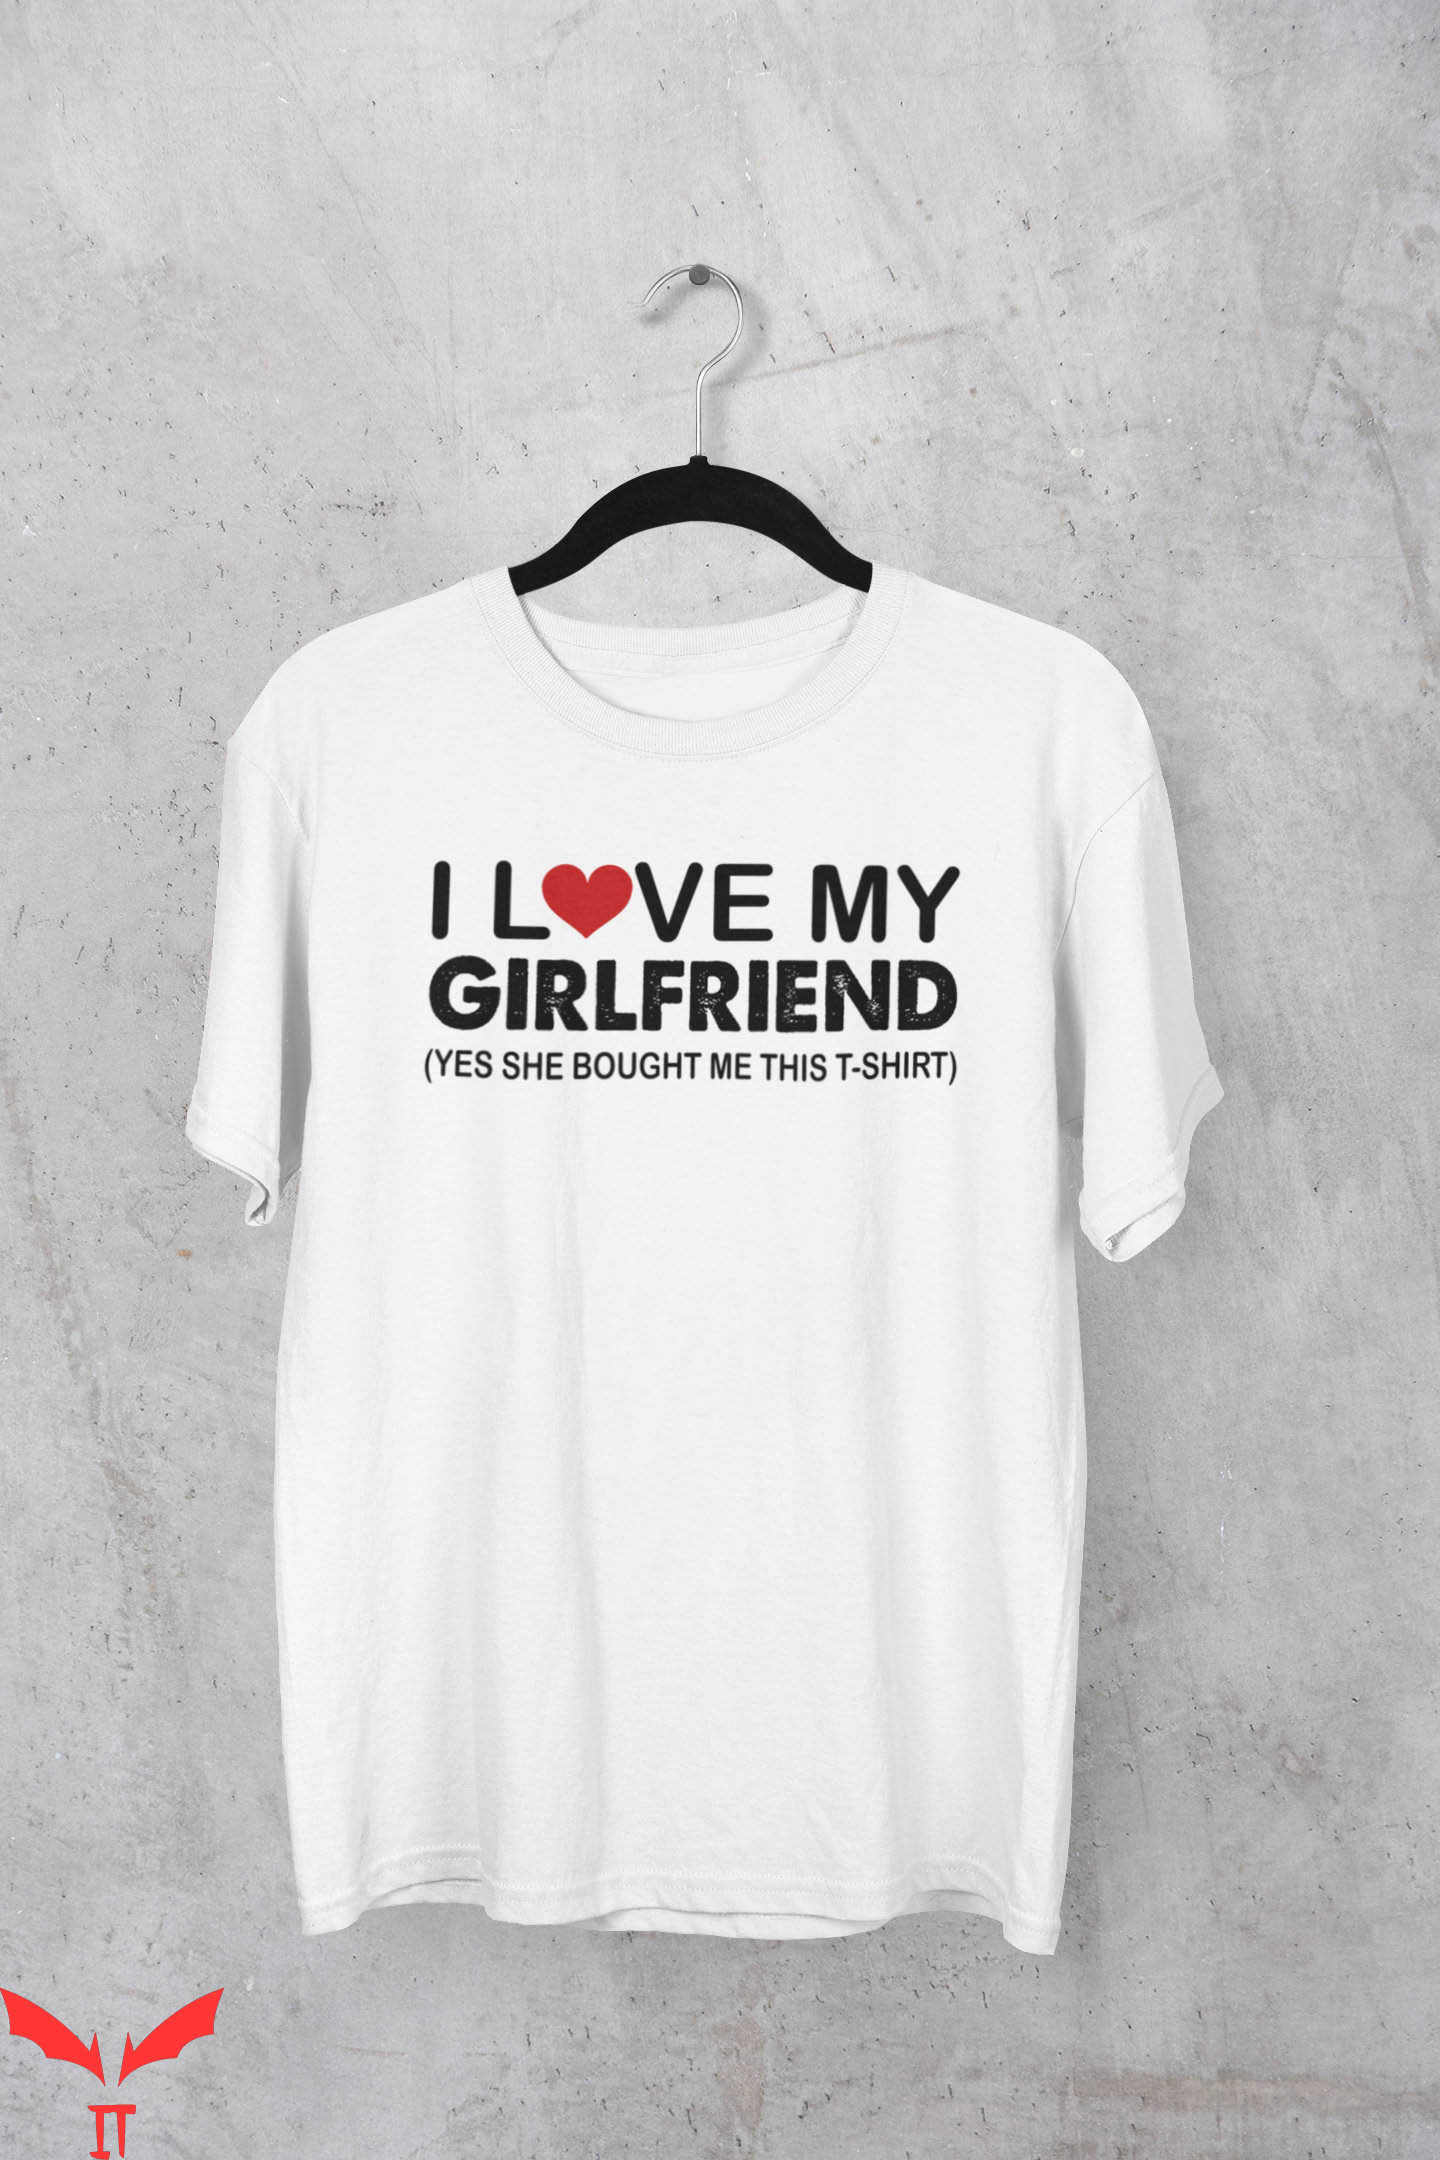 I 3 My Girlfriend T-Shirt I Love My Girlfriend Valentine Tee